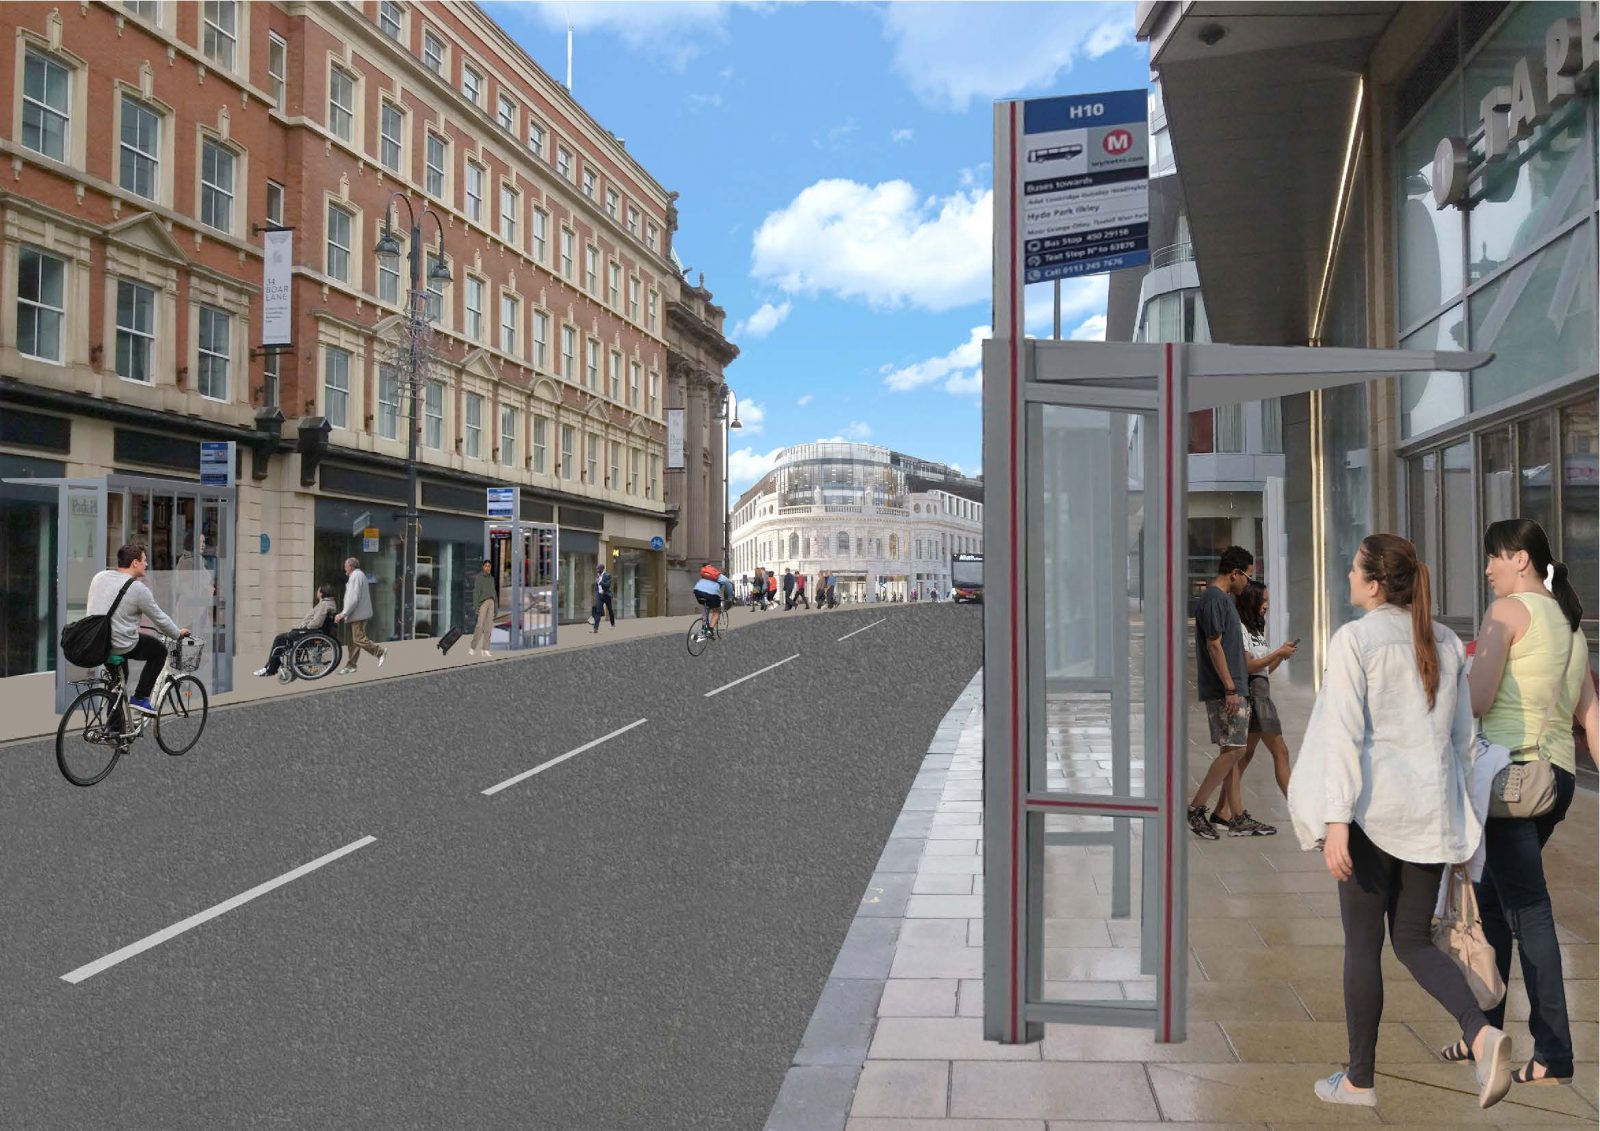 CGI images of Leeds city centre.